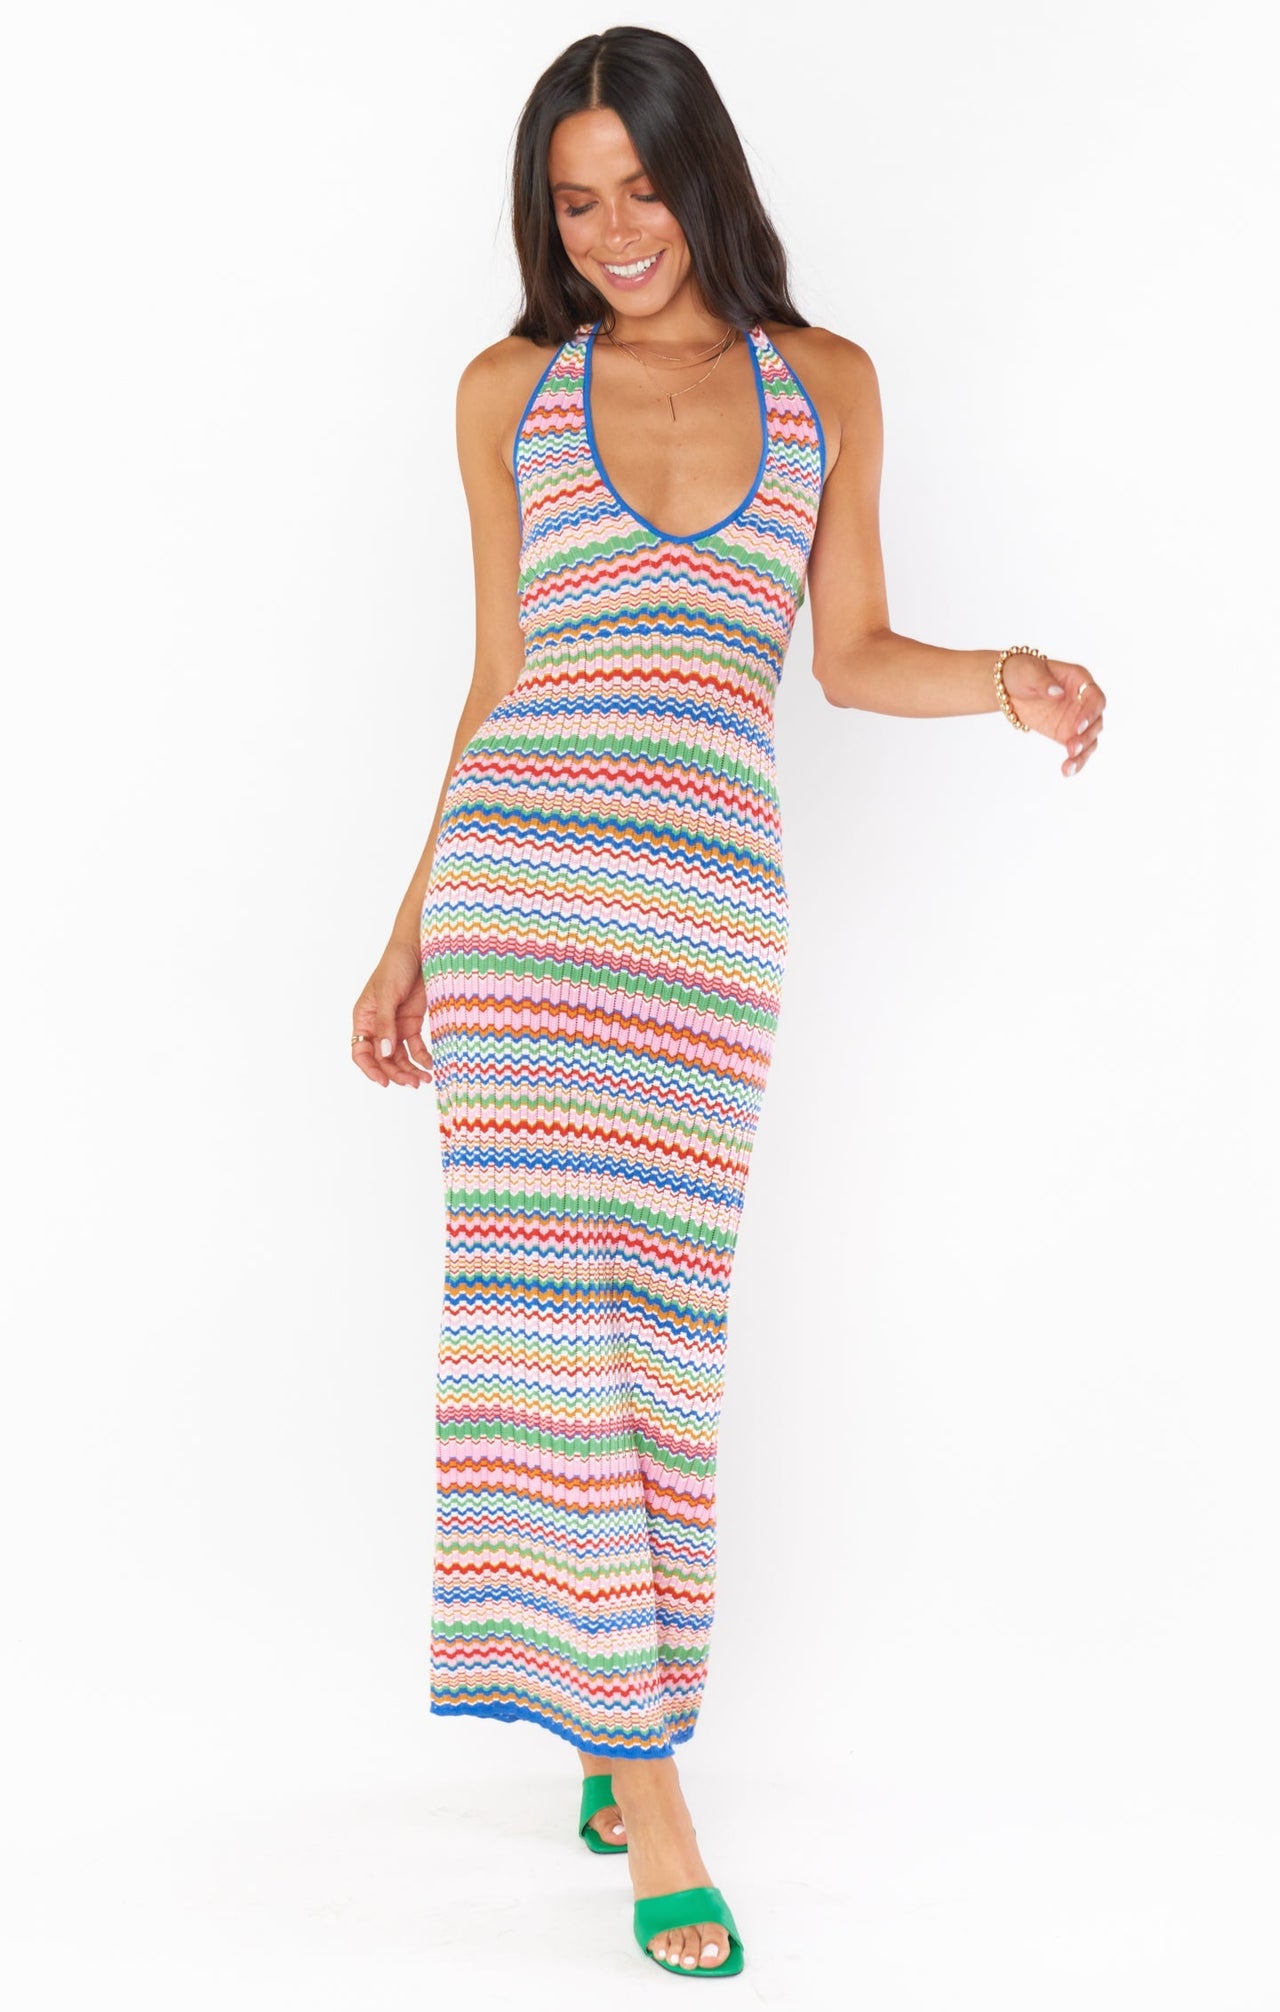 Kate Summer Wave Halter Dress Multi, Dress by Show Me Your Mumu | LIT Boutique